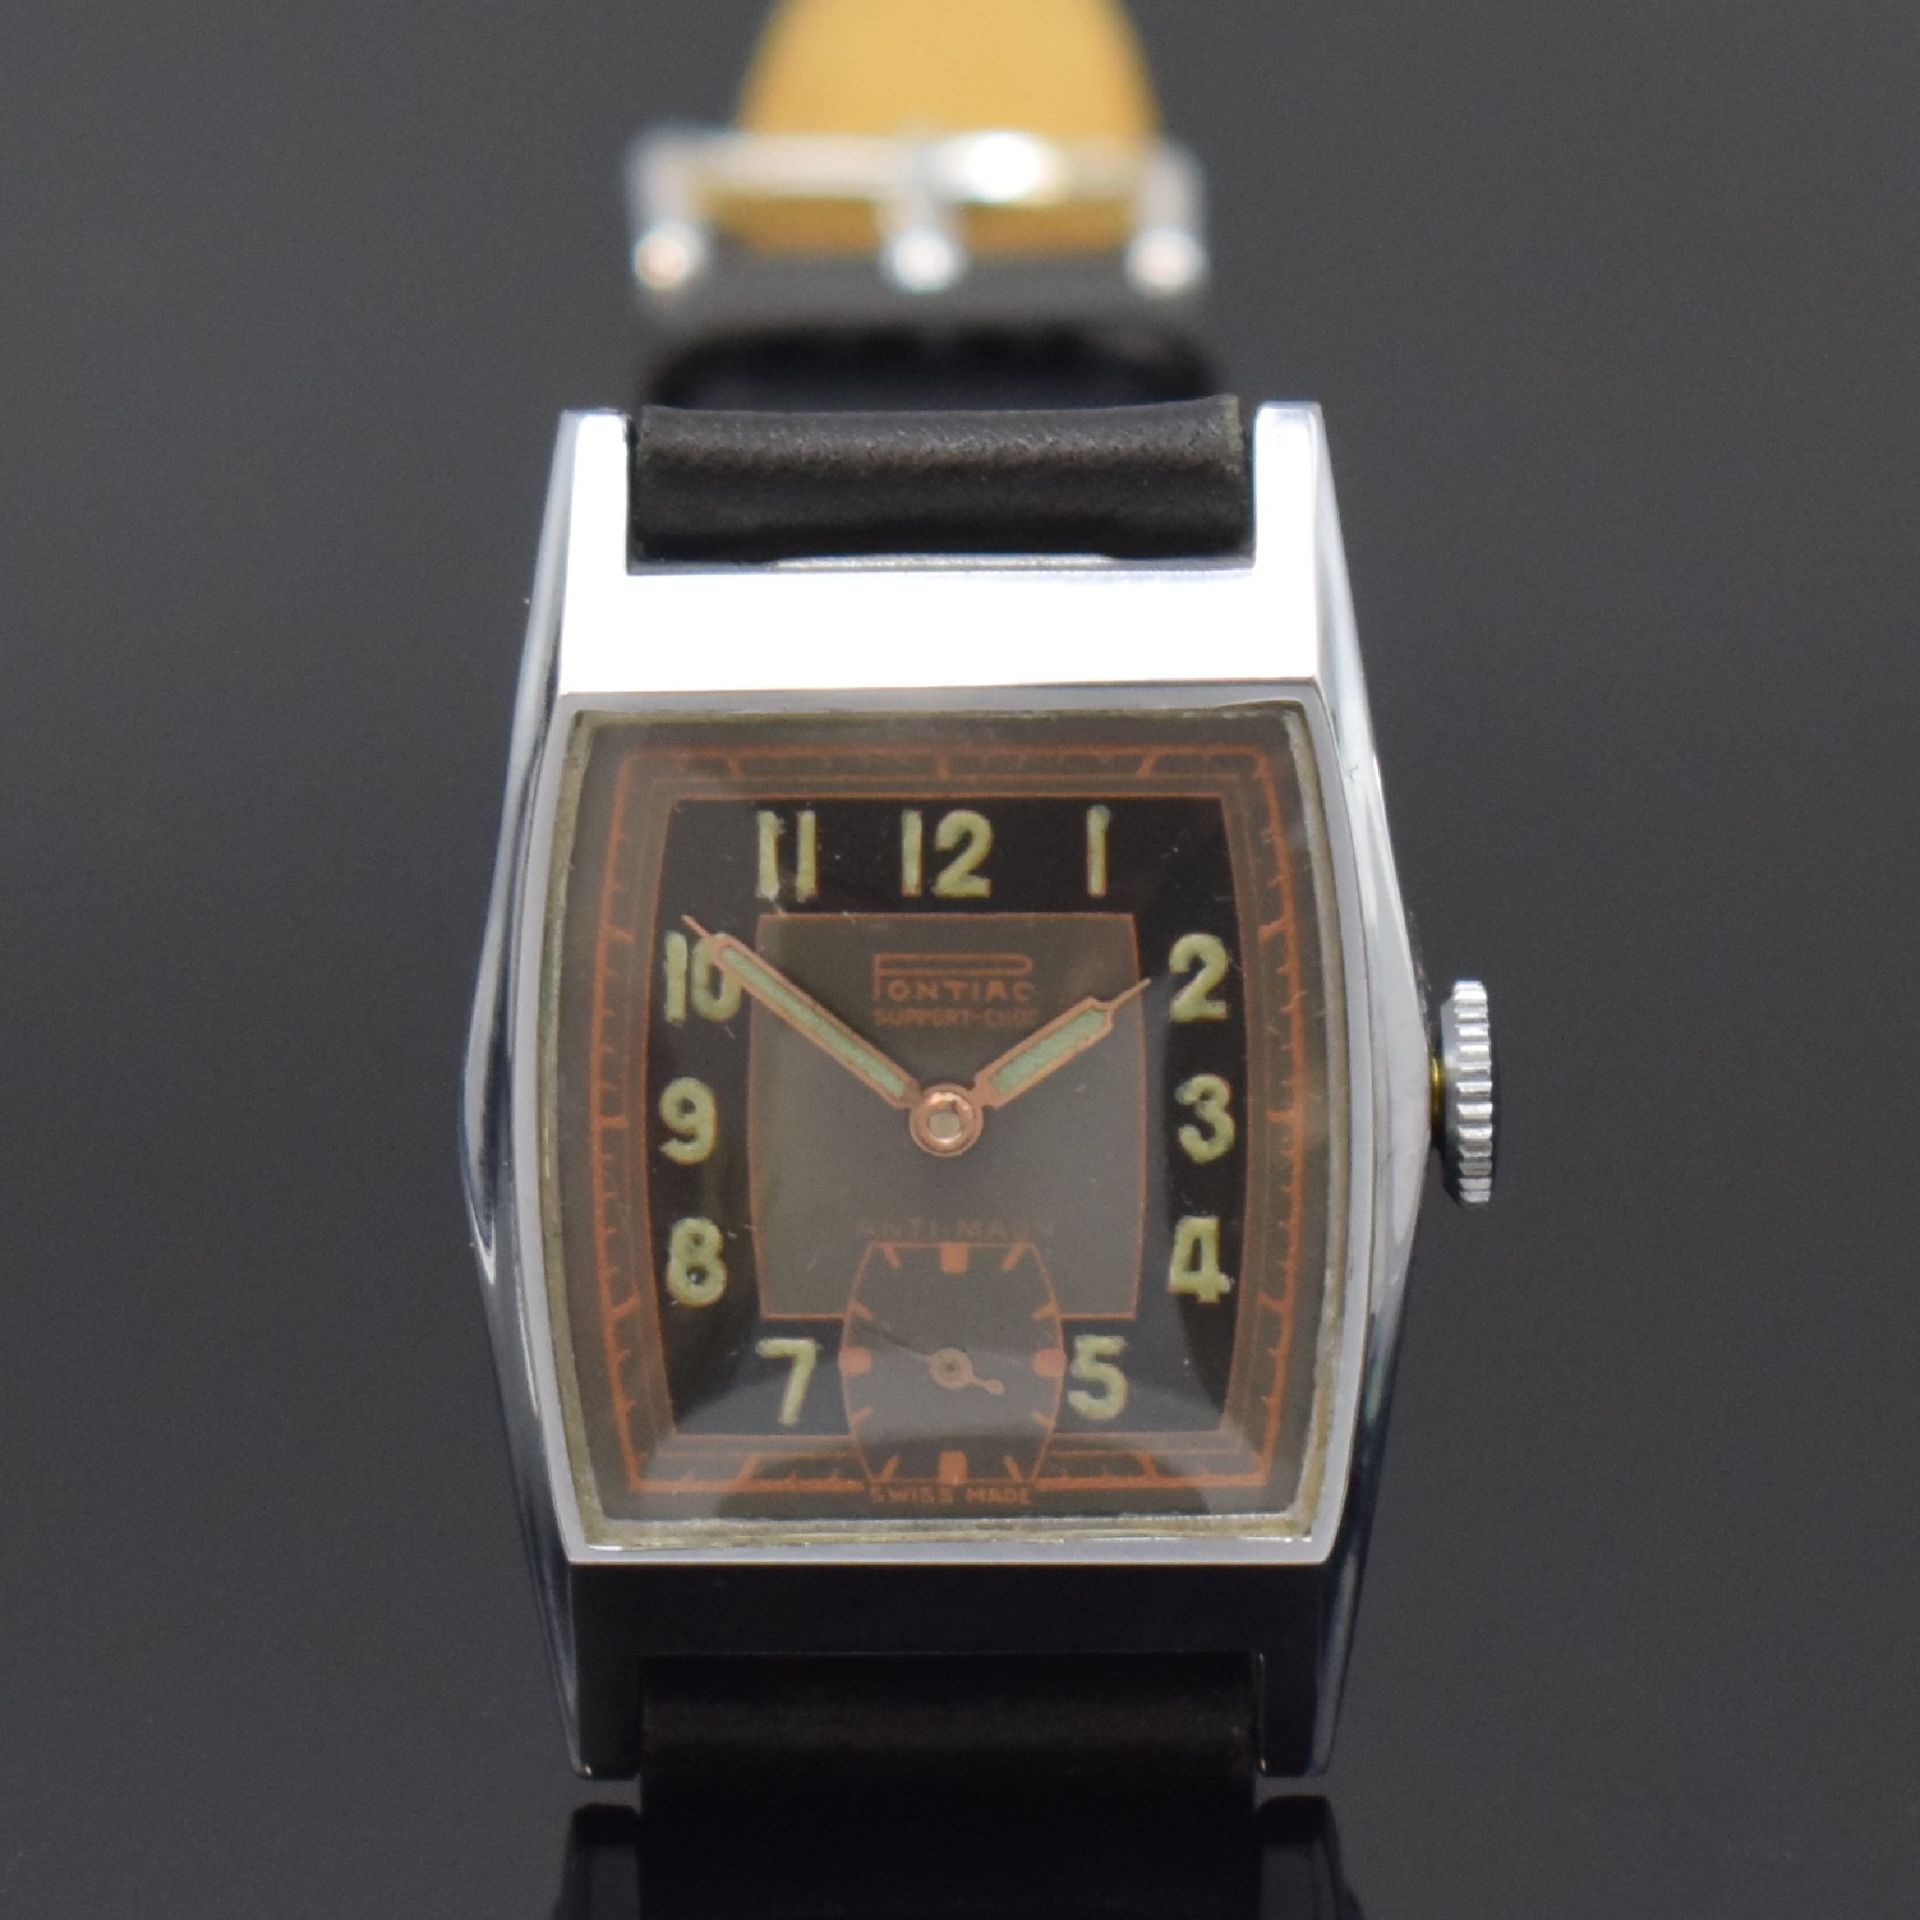 PONTIAC 2 verchromte Armbanduhren,  Schweiz um 1940, - Bild 2 aus 13